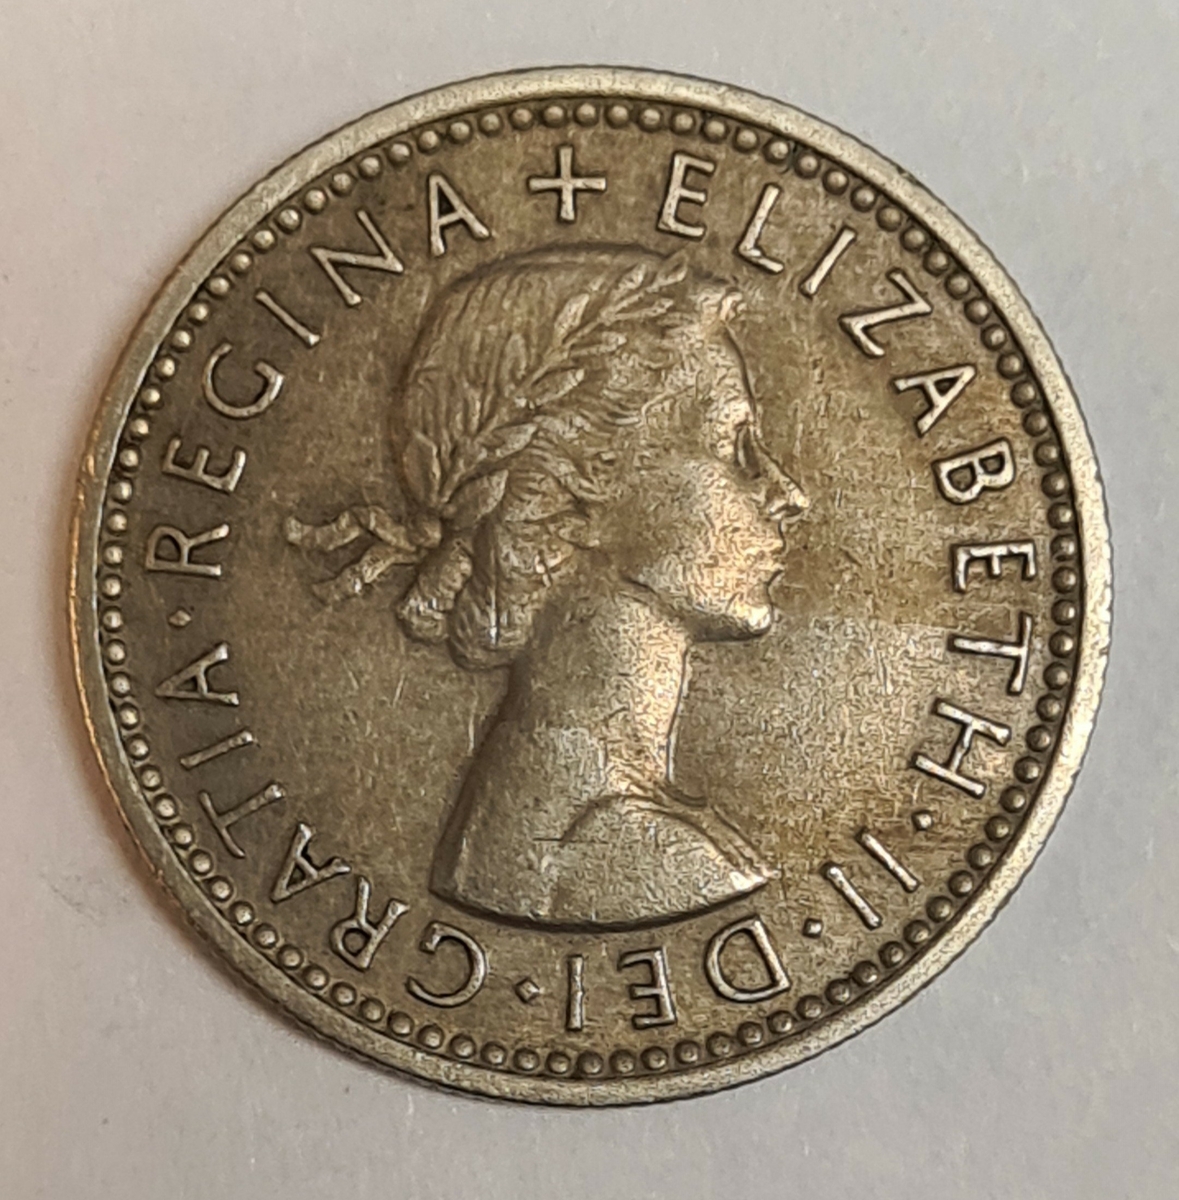 5 mynt från Storbritanien.
6 Pence 1967
6 Pence 1967
6 Pence 1962
6 Pence 1955
6 Pence 1961